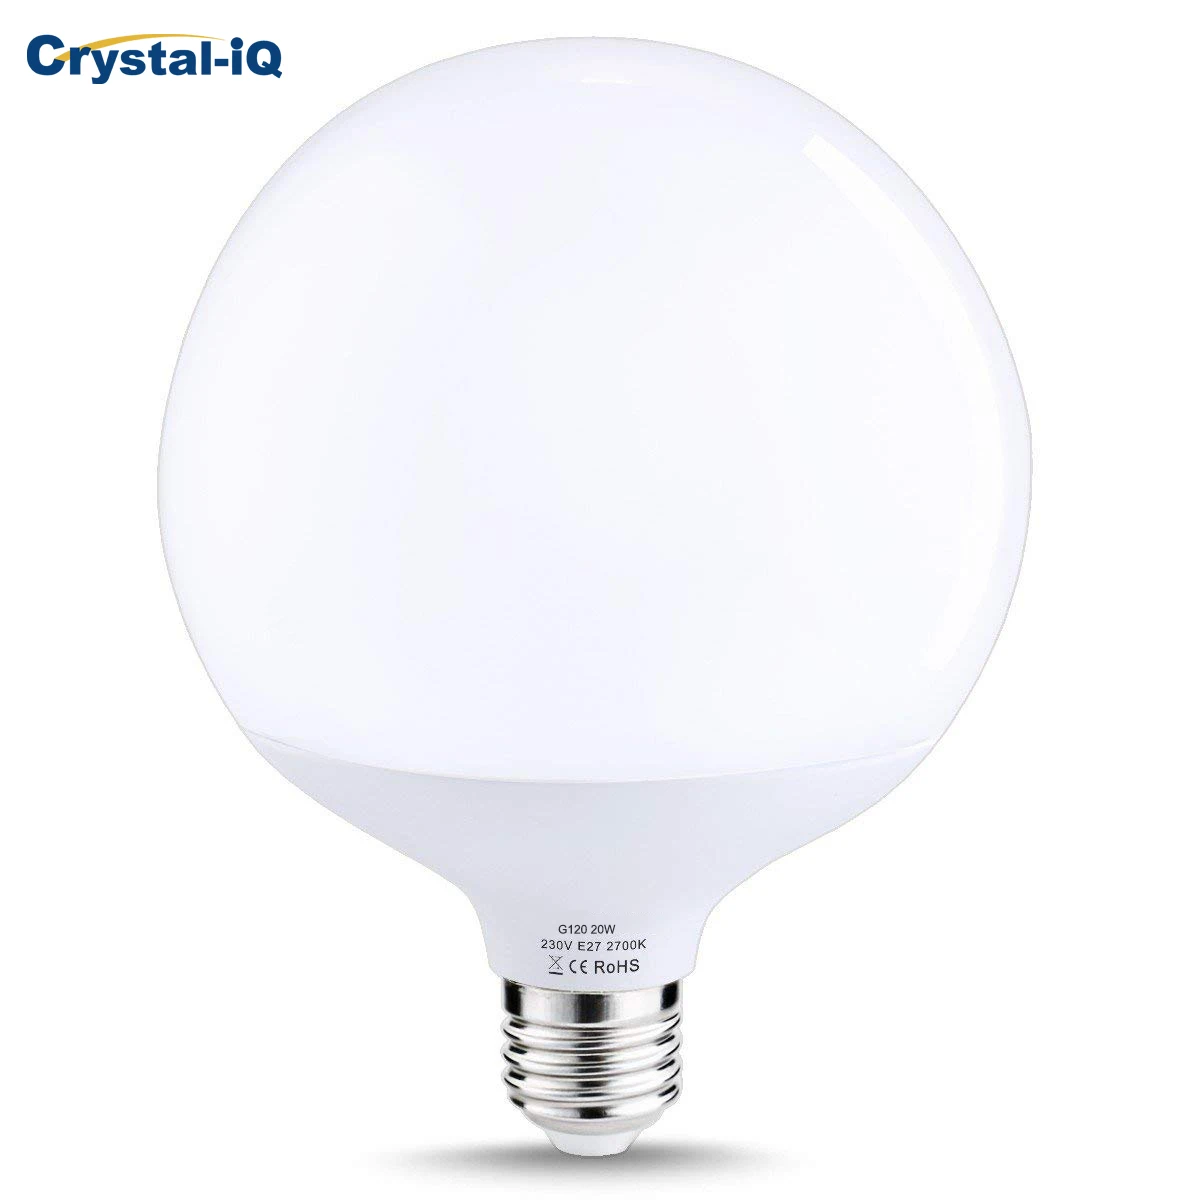 

E26 E27 LED Light Bulb 20W Globe G120 Lamp Edison Screw 200W Equivalent Daylight 6000K bombillas Energy Saving 1800lm for Home